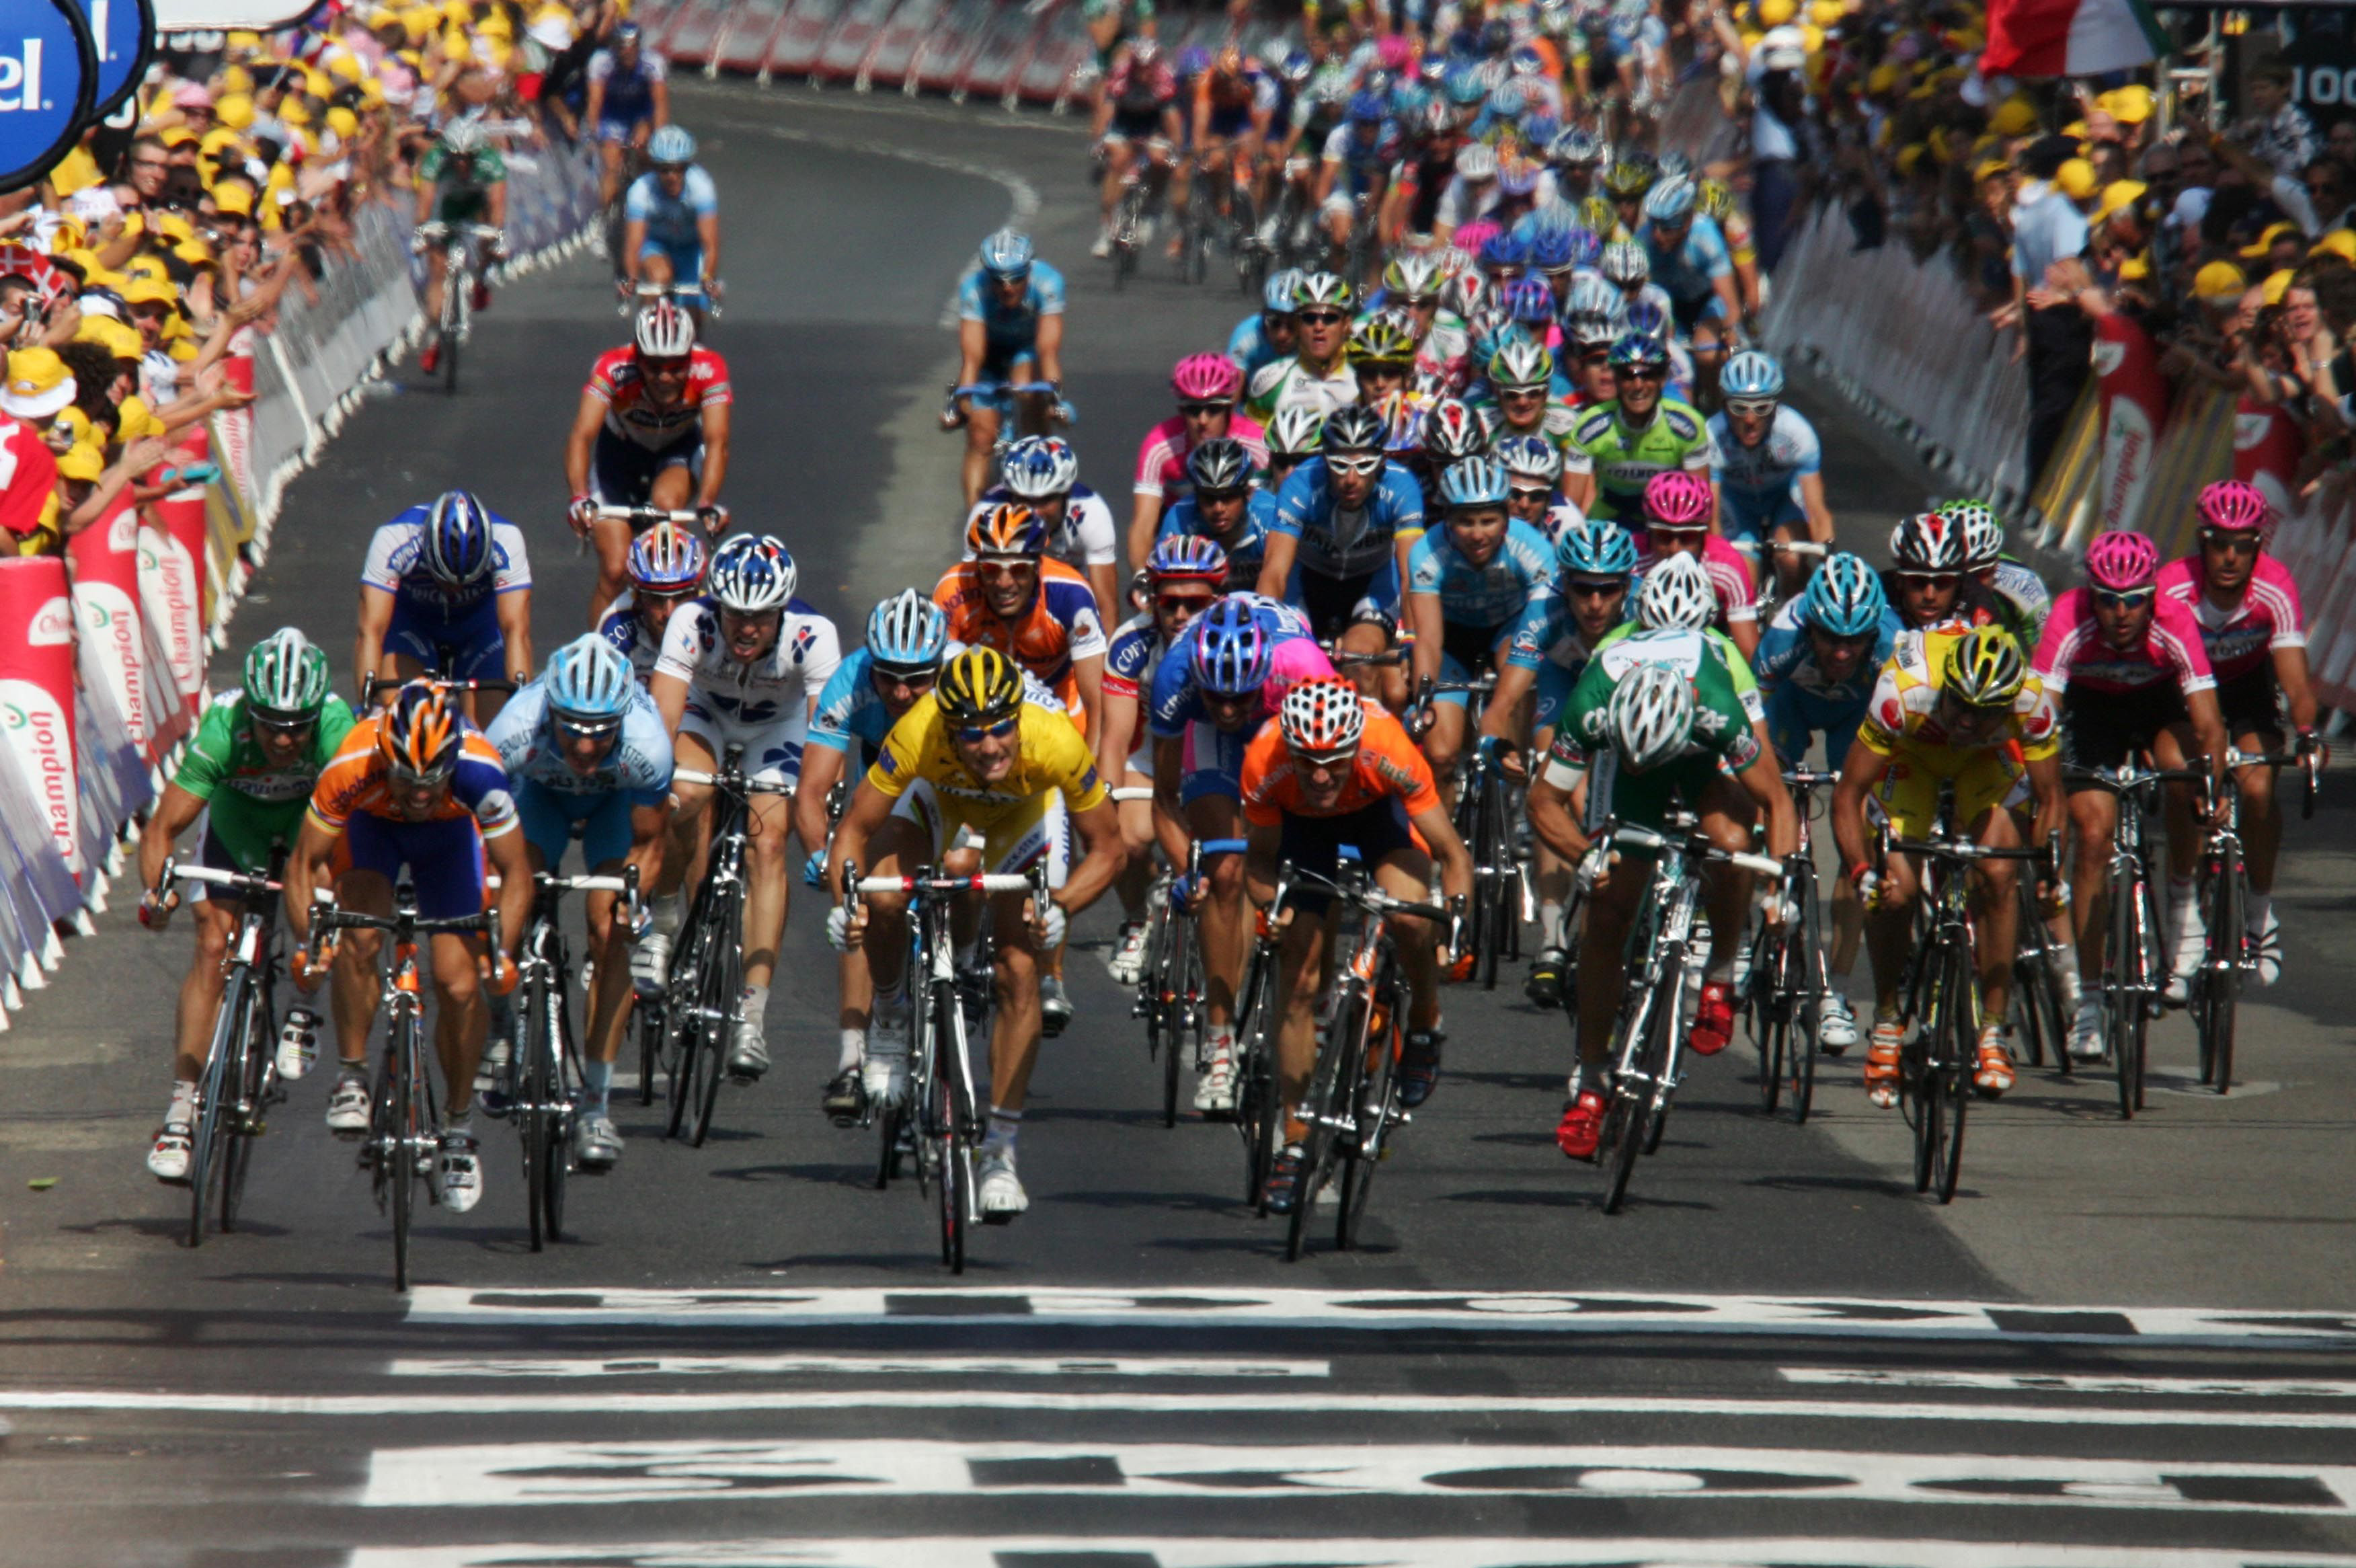 Cykling, Dopning, Cykel, Tour de France